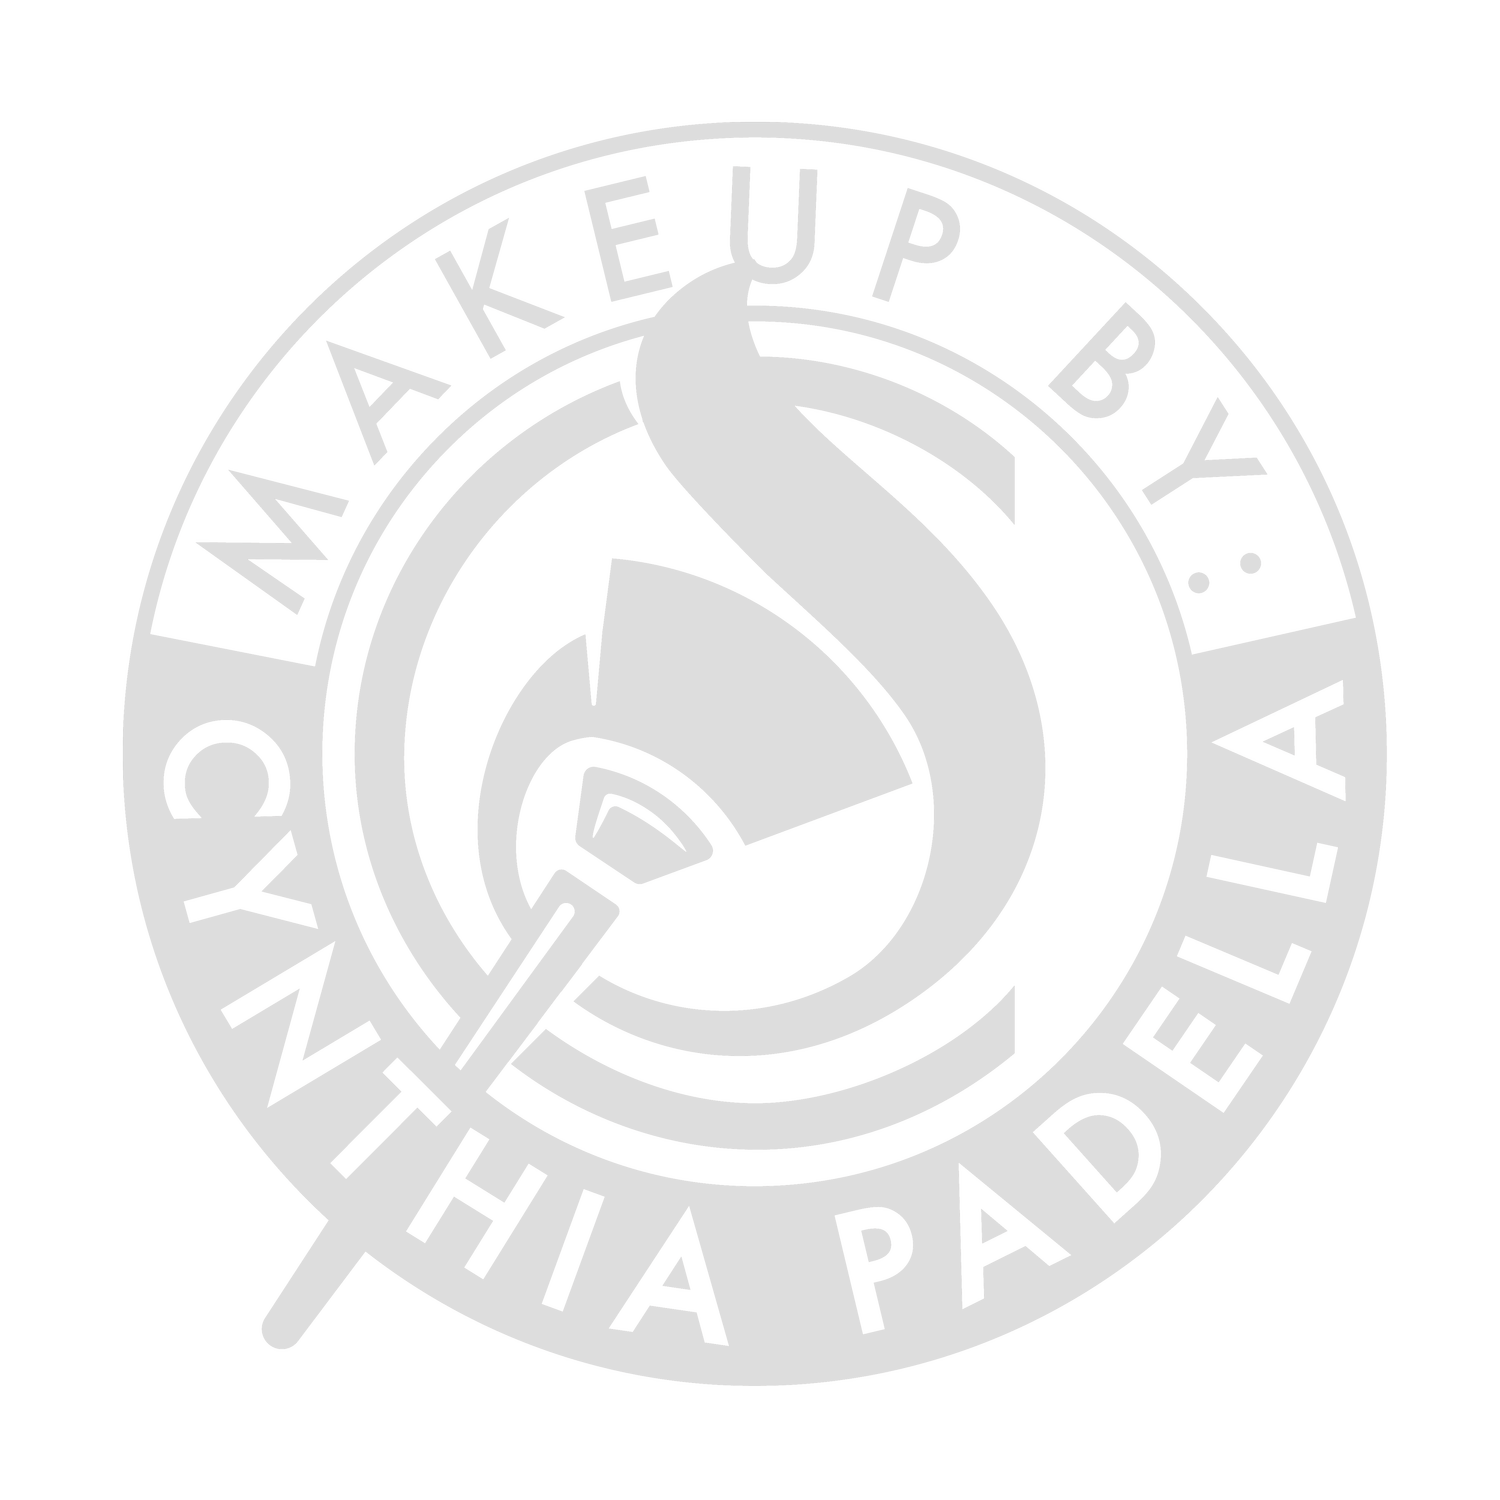 Cynthia Padella Makeup